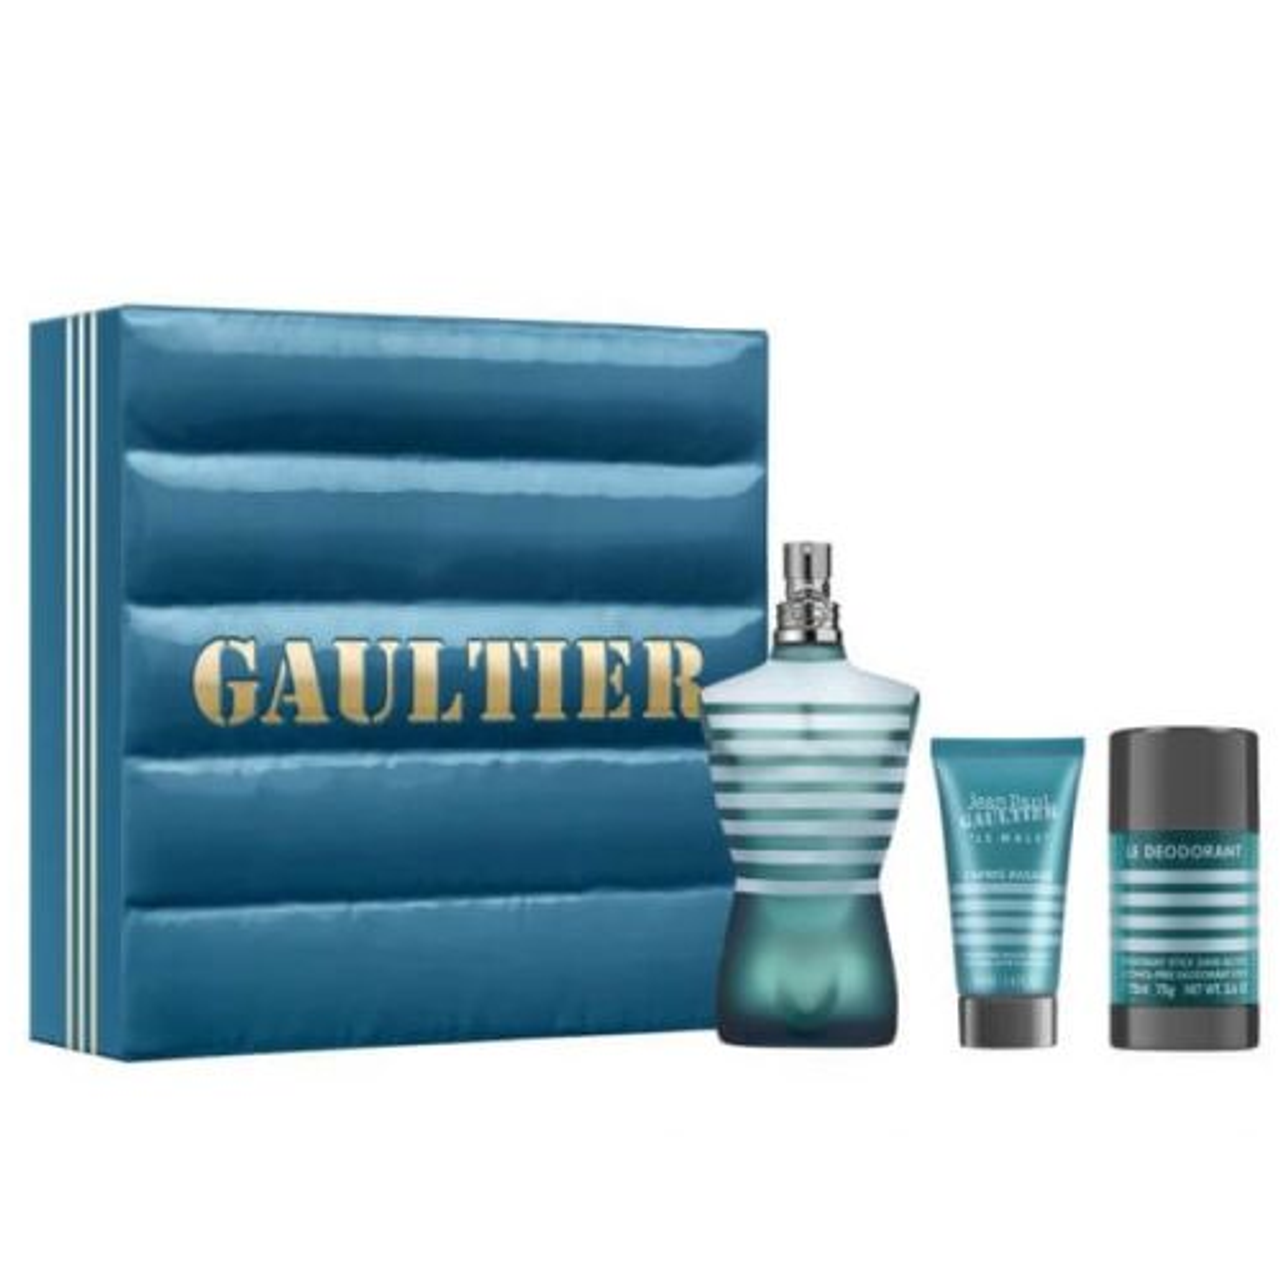 Jean Paul Gaultier Cologne By Jean Paul Gaultier For Men 4.2 oz